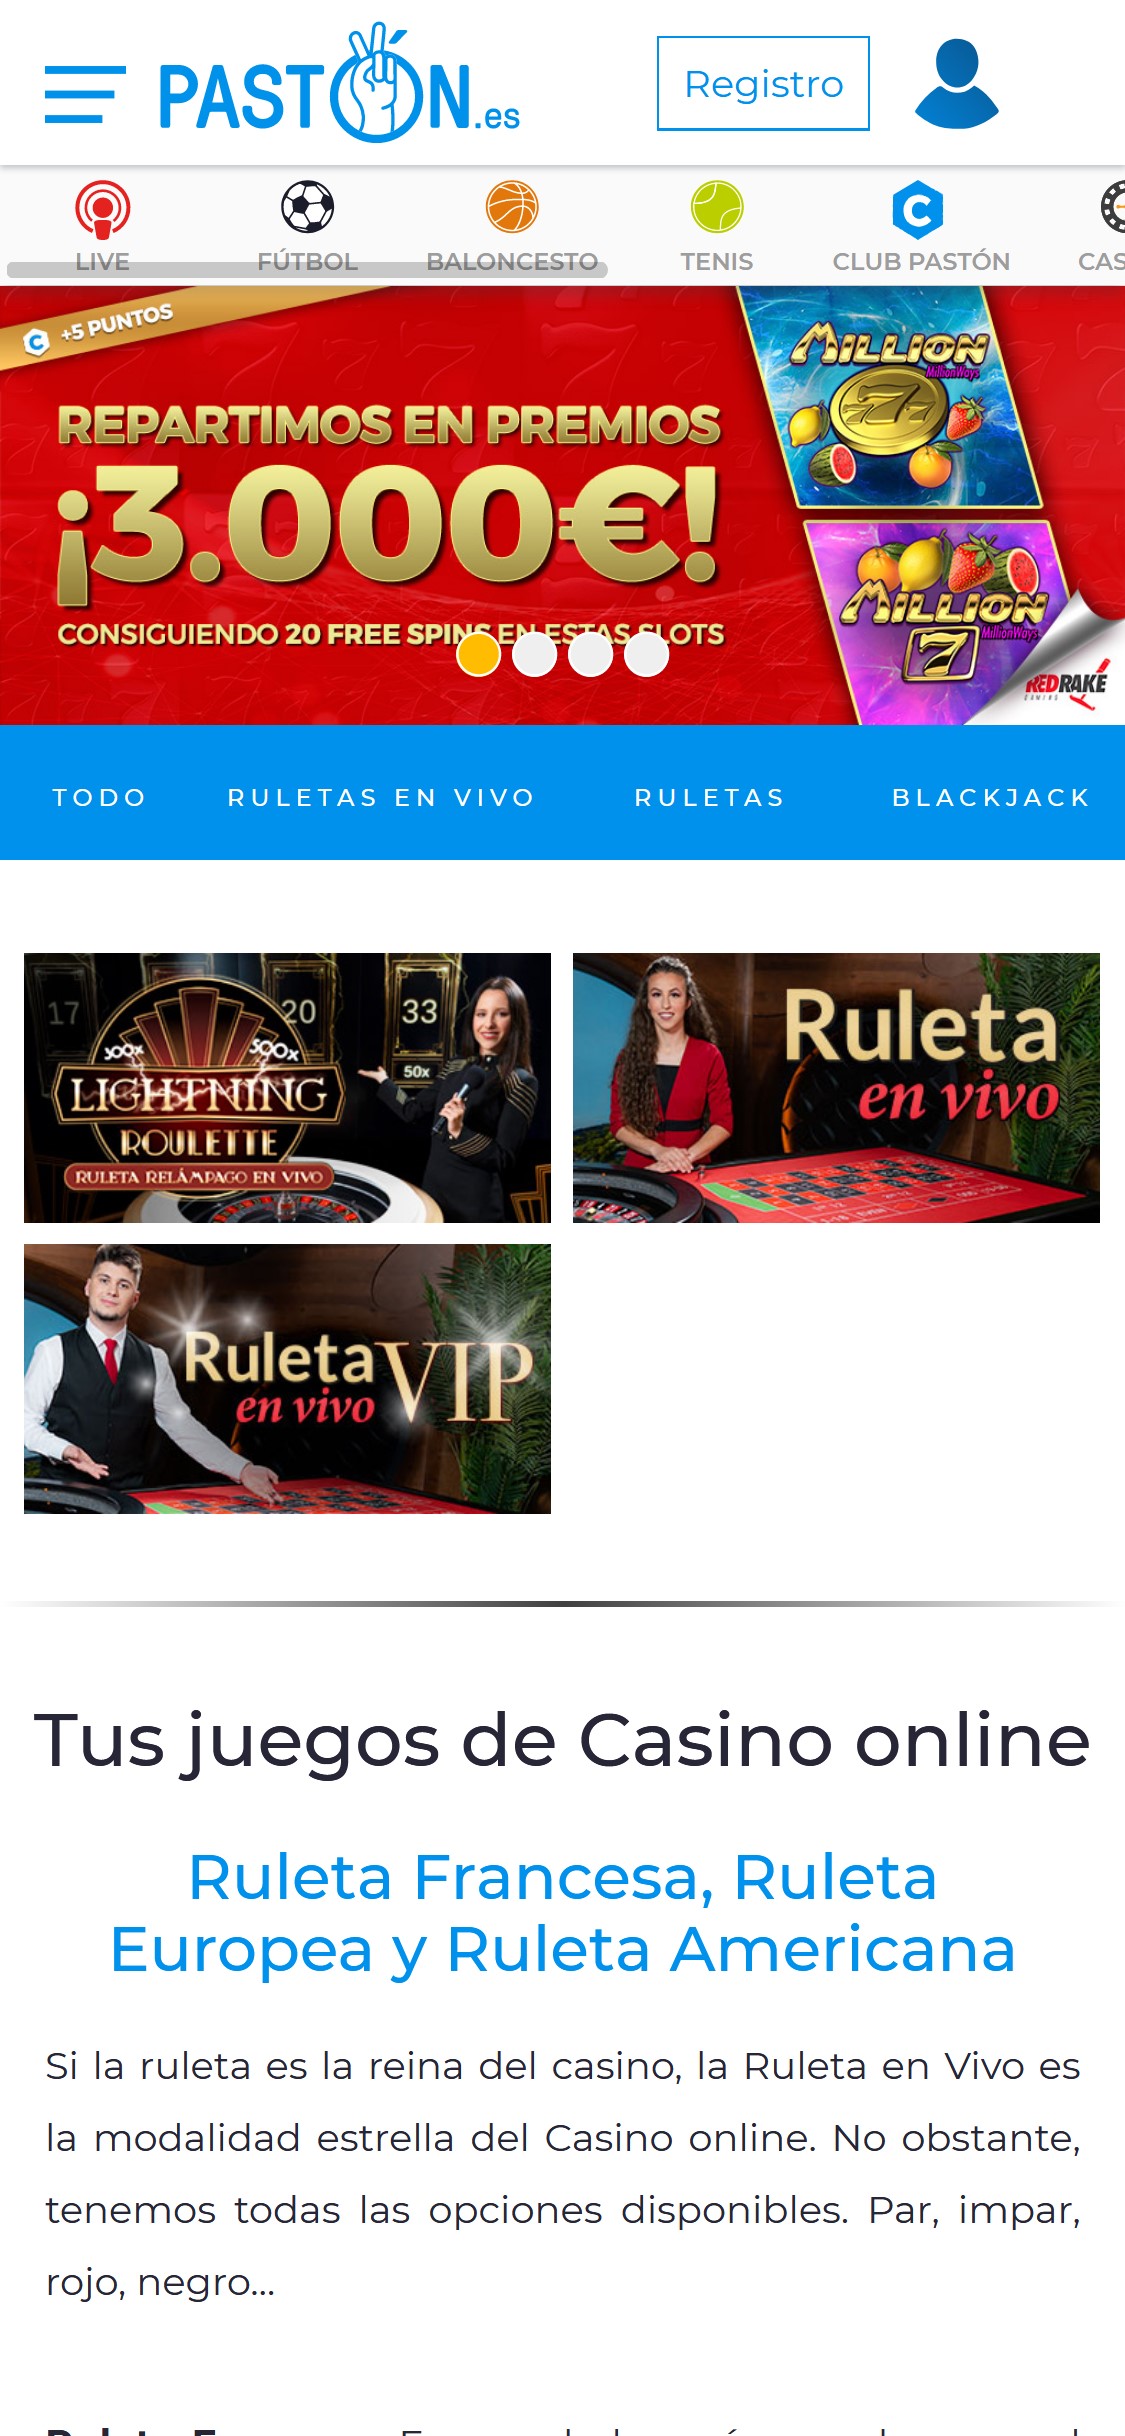 Paston Casino Mobile Live Dealer Games Review